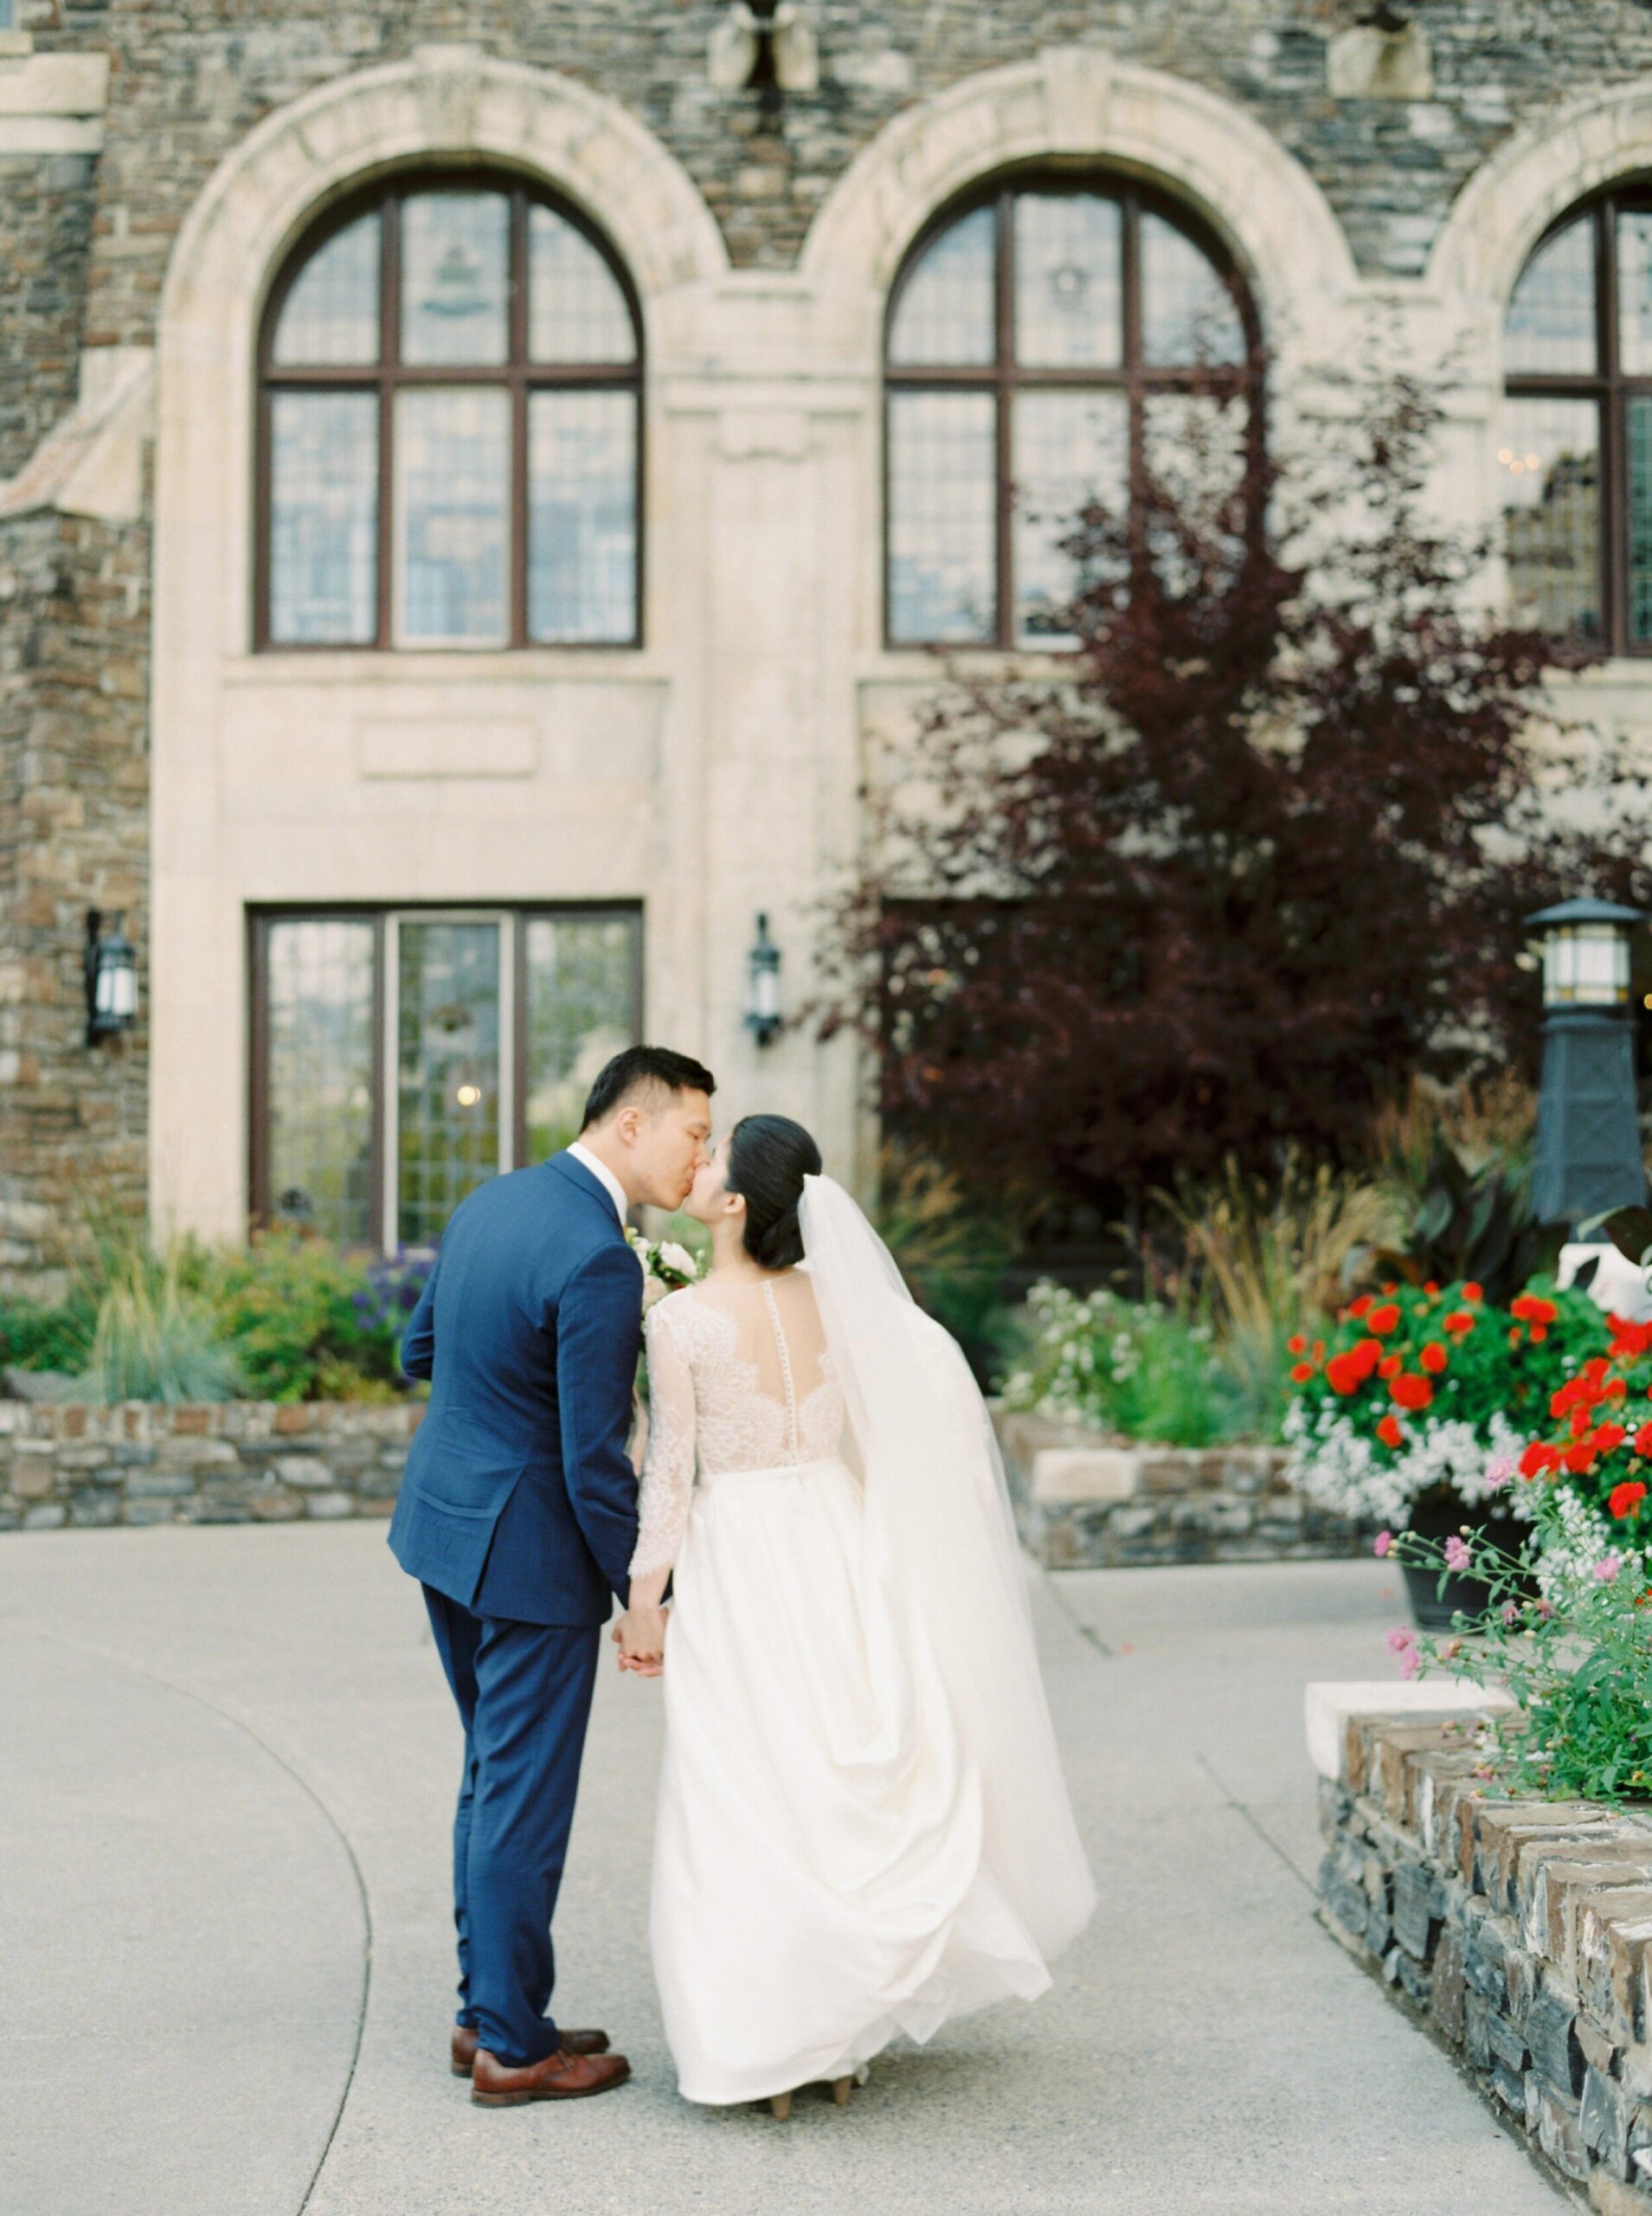  Bride & groom first look | Fairmont Banff Springs hotel wedding photographers | fine art film photography | portra 400 